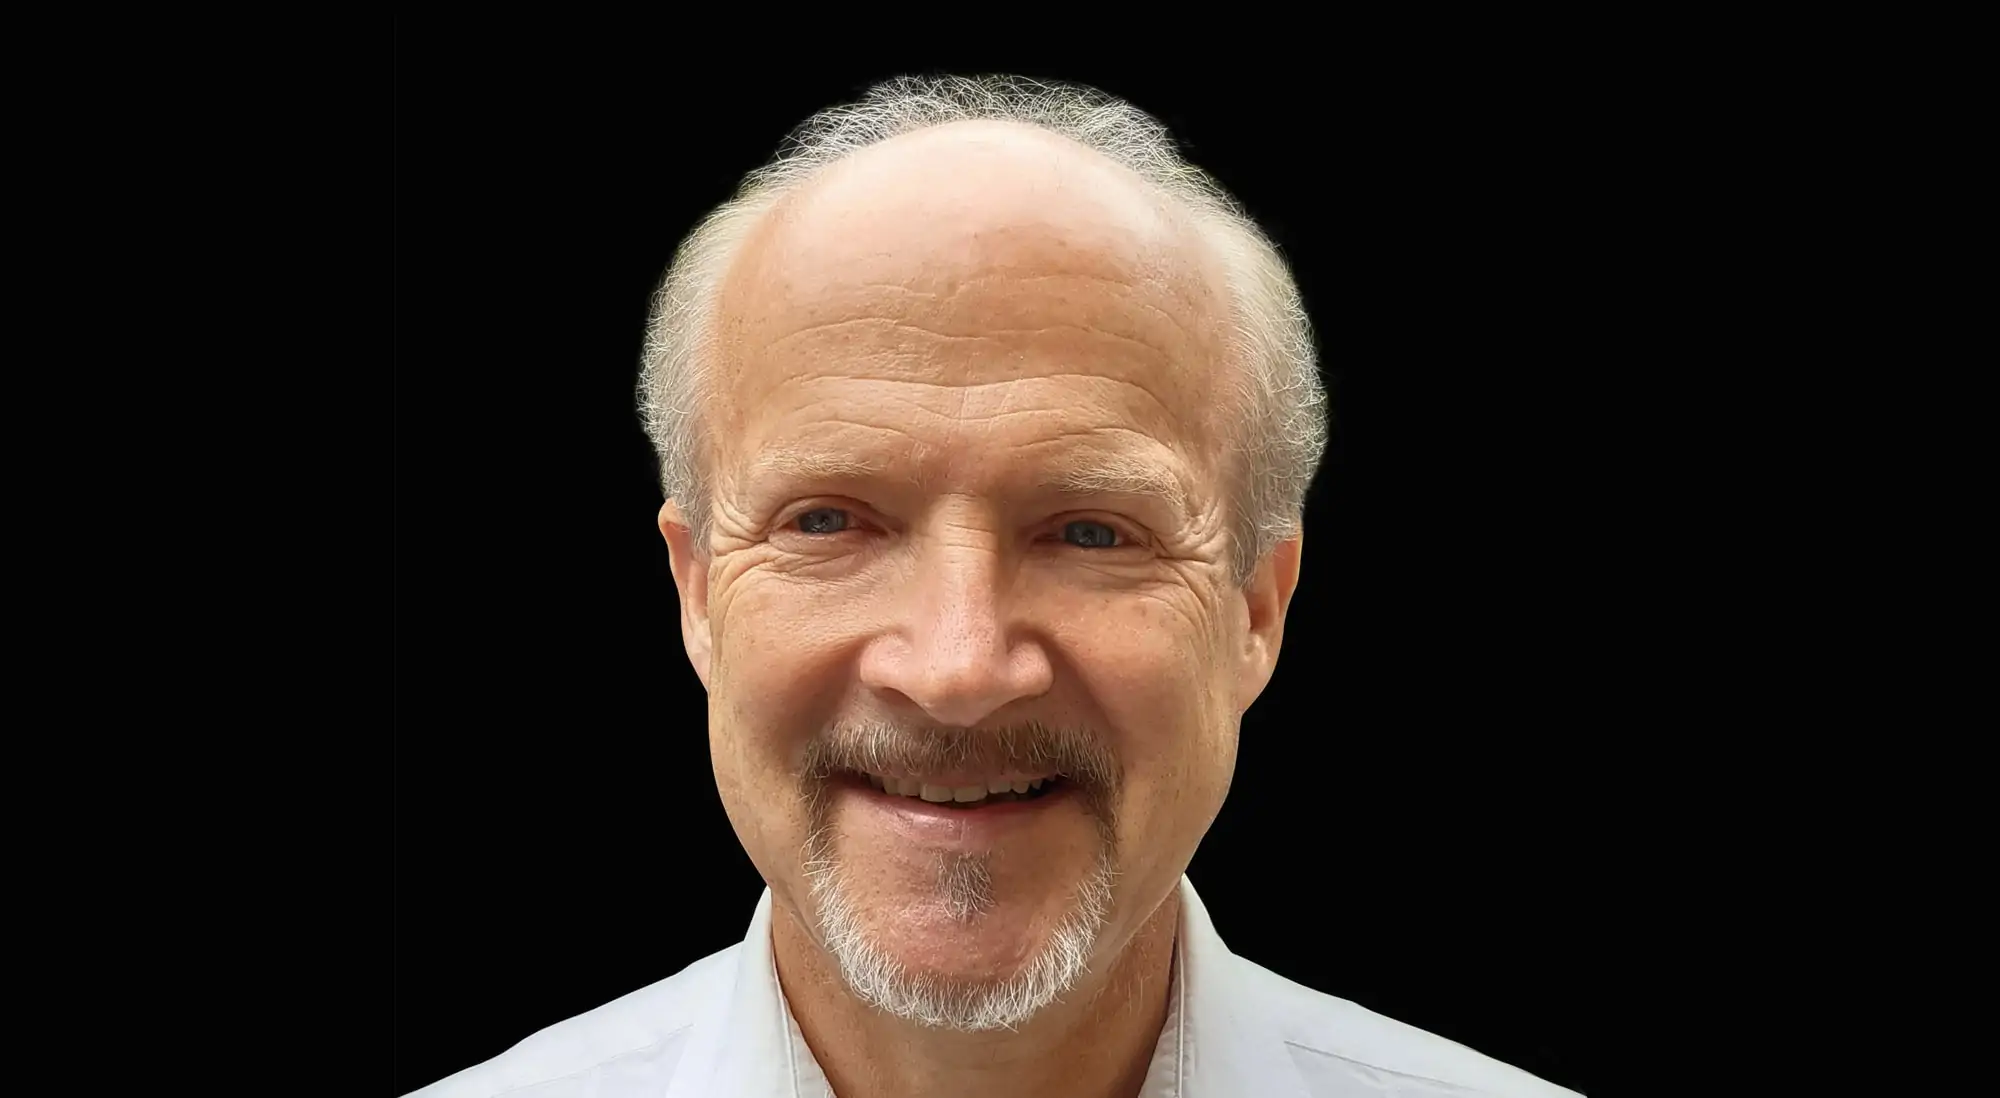 Prof. Ernst Wagner, member Scientific Advisory Board at Coriolis Pharma